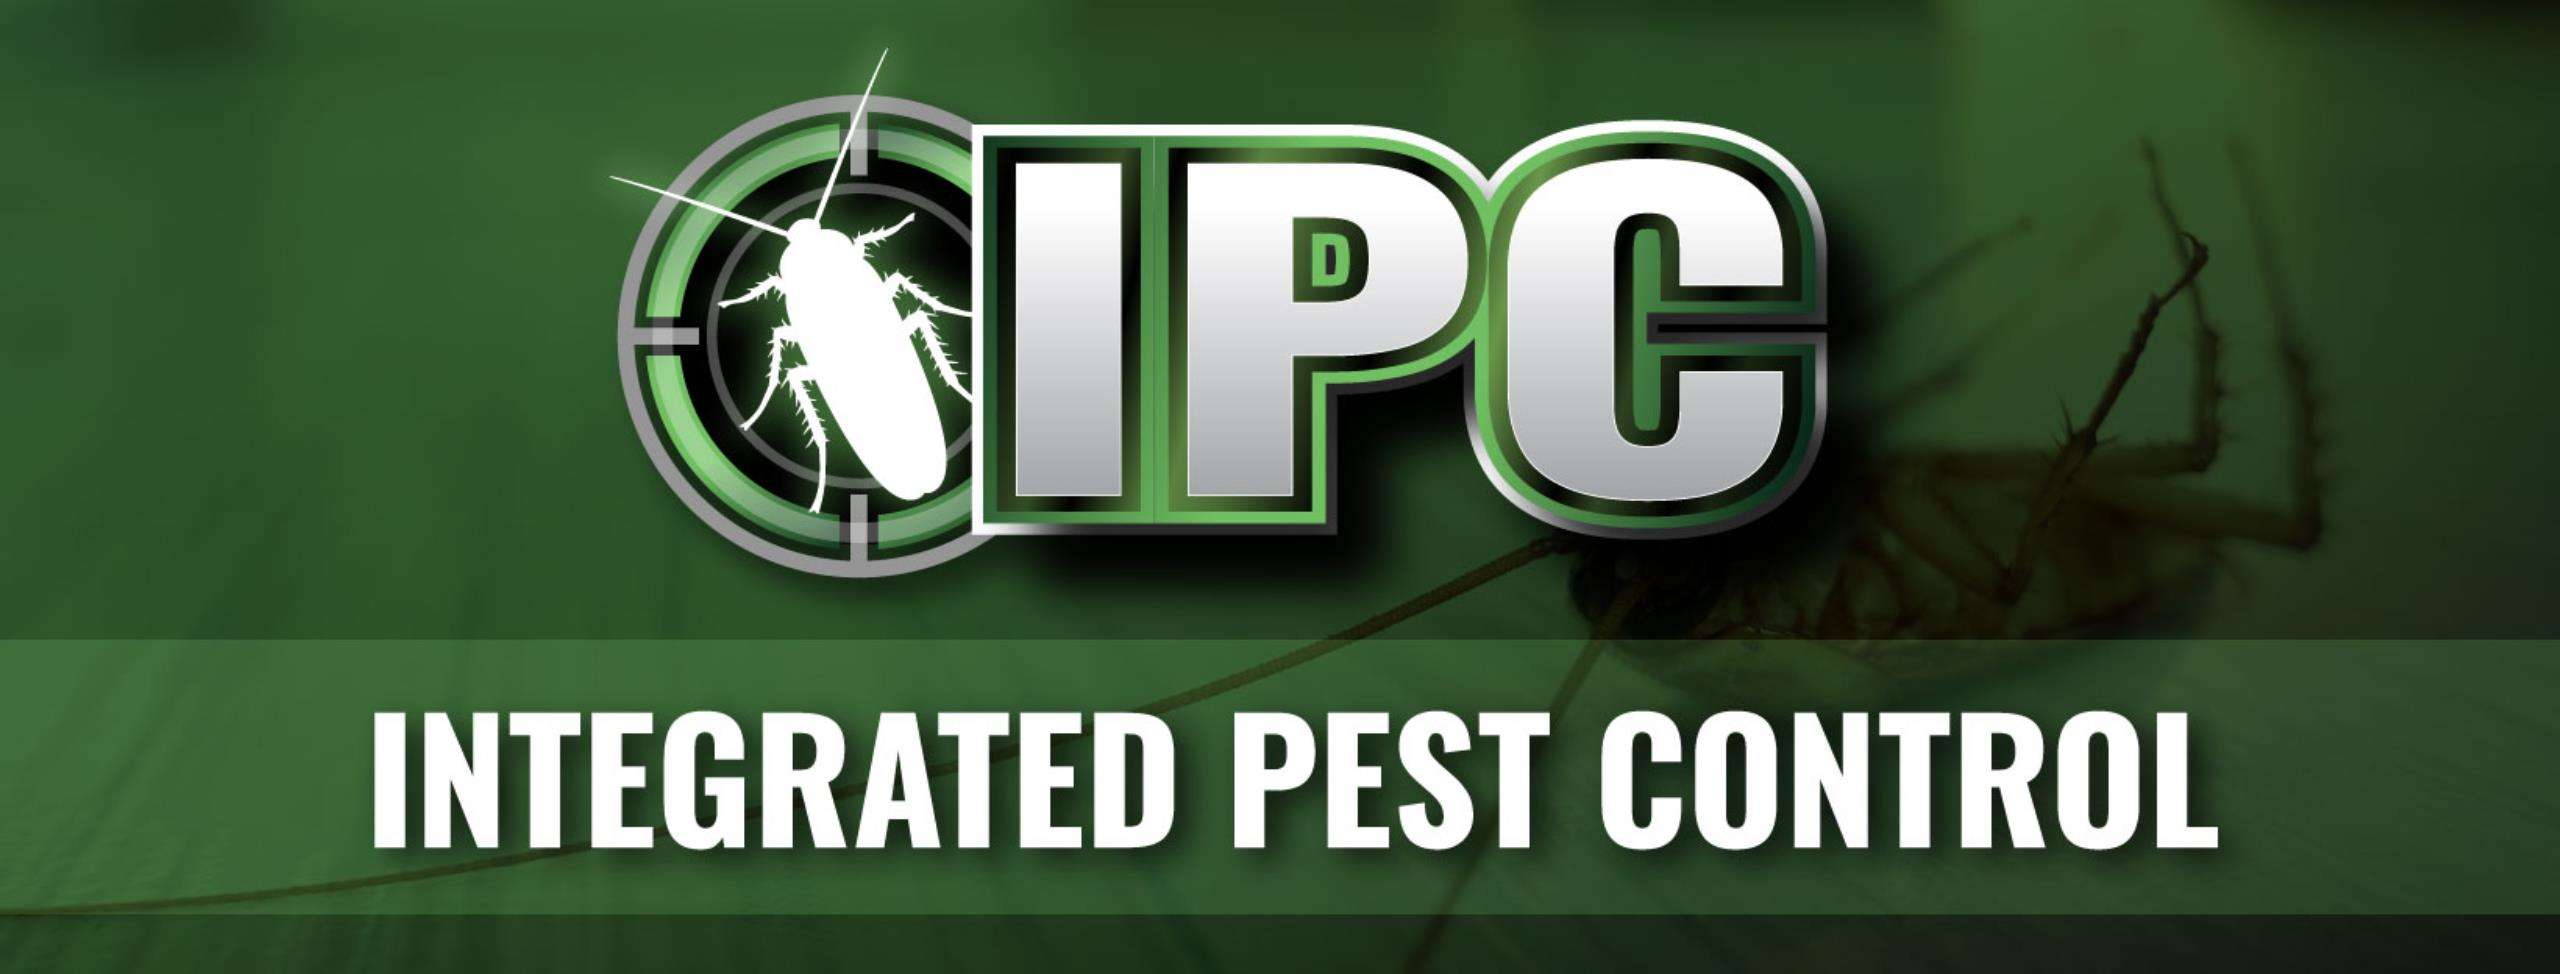 Integrated Pest Control of WNY LLC Logo